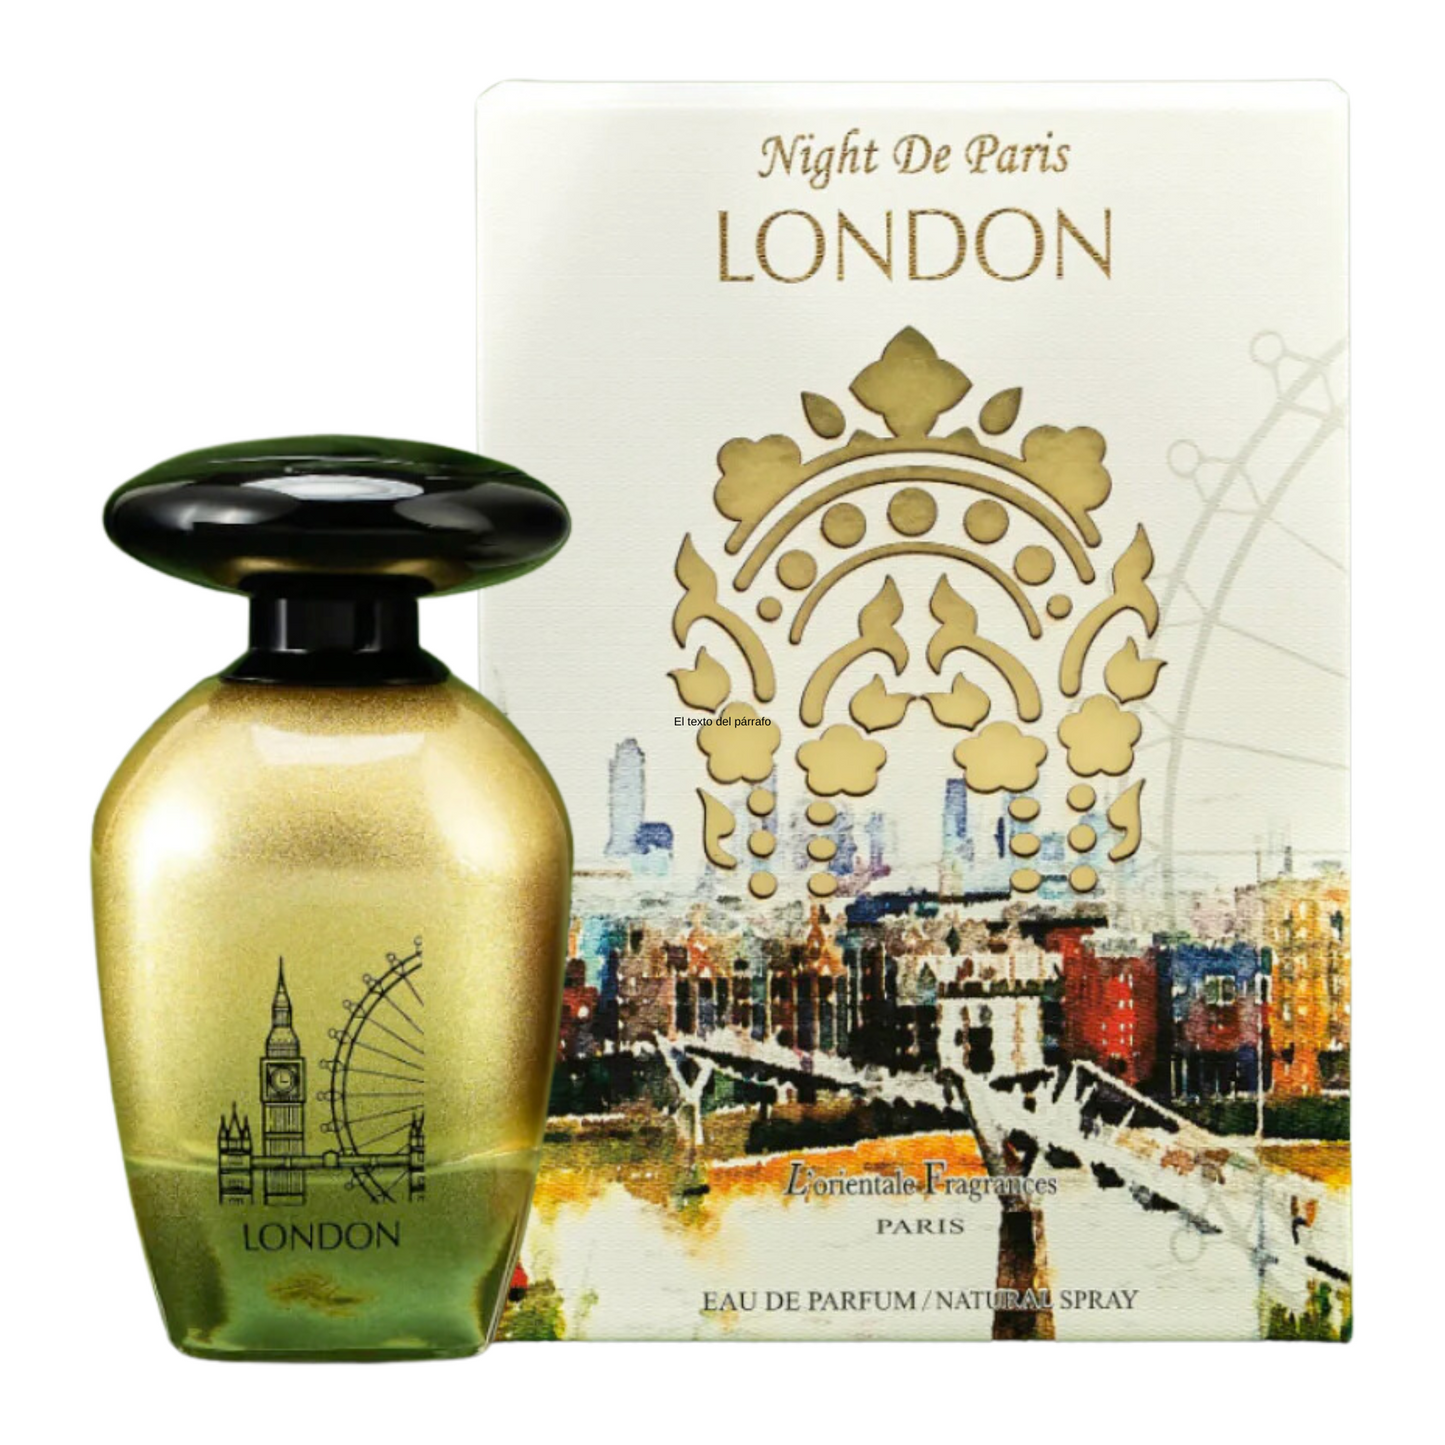 Perfume Unisex L'orientale Fragrances Night De Paris LONDON 100ml EDP